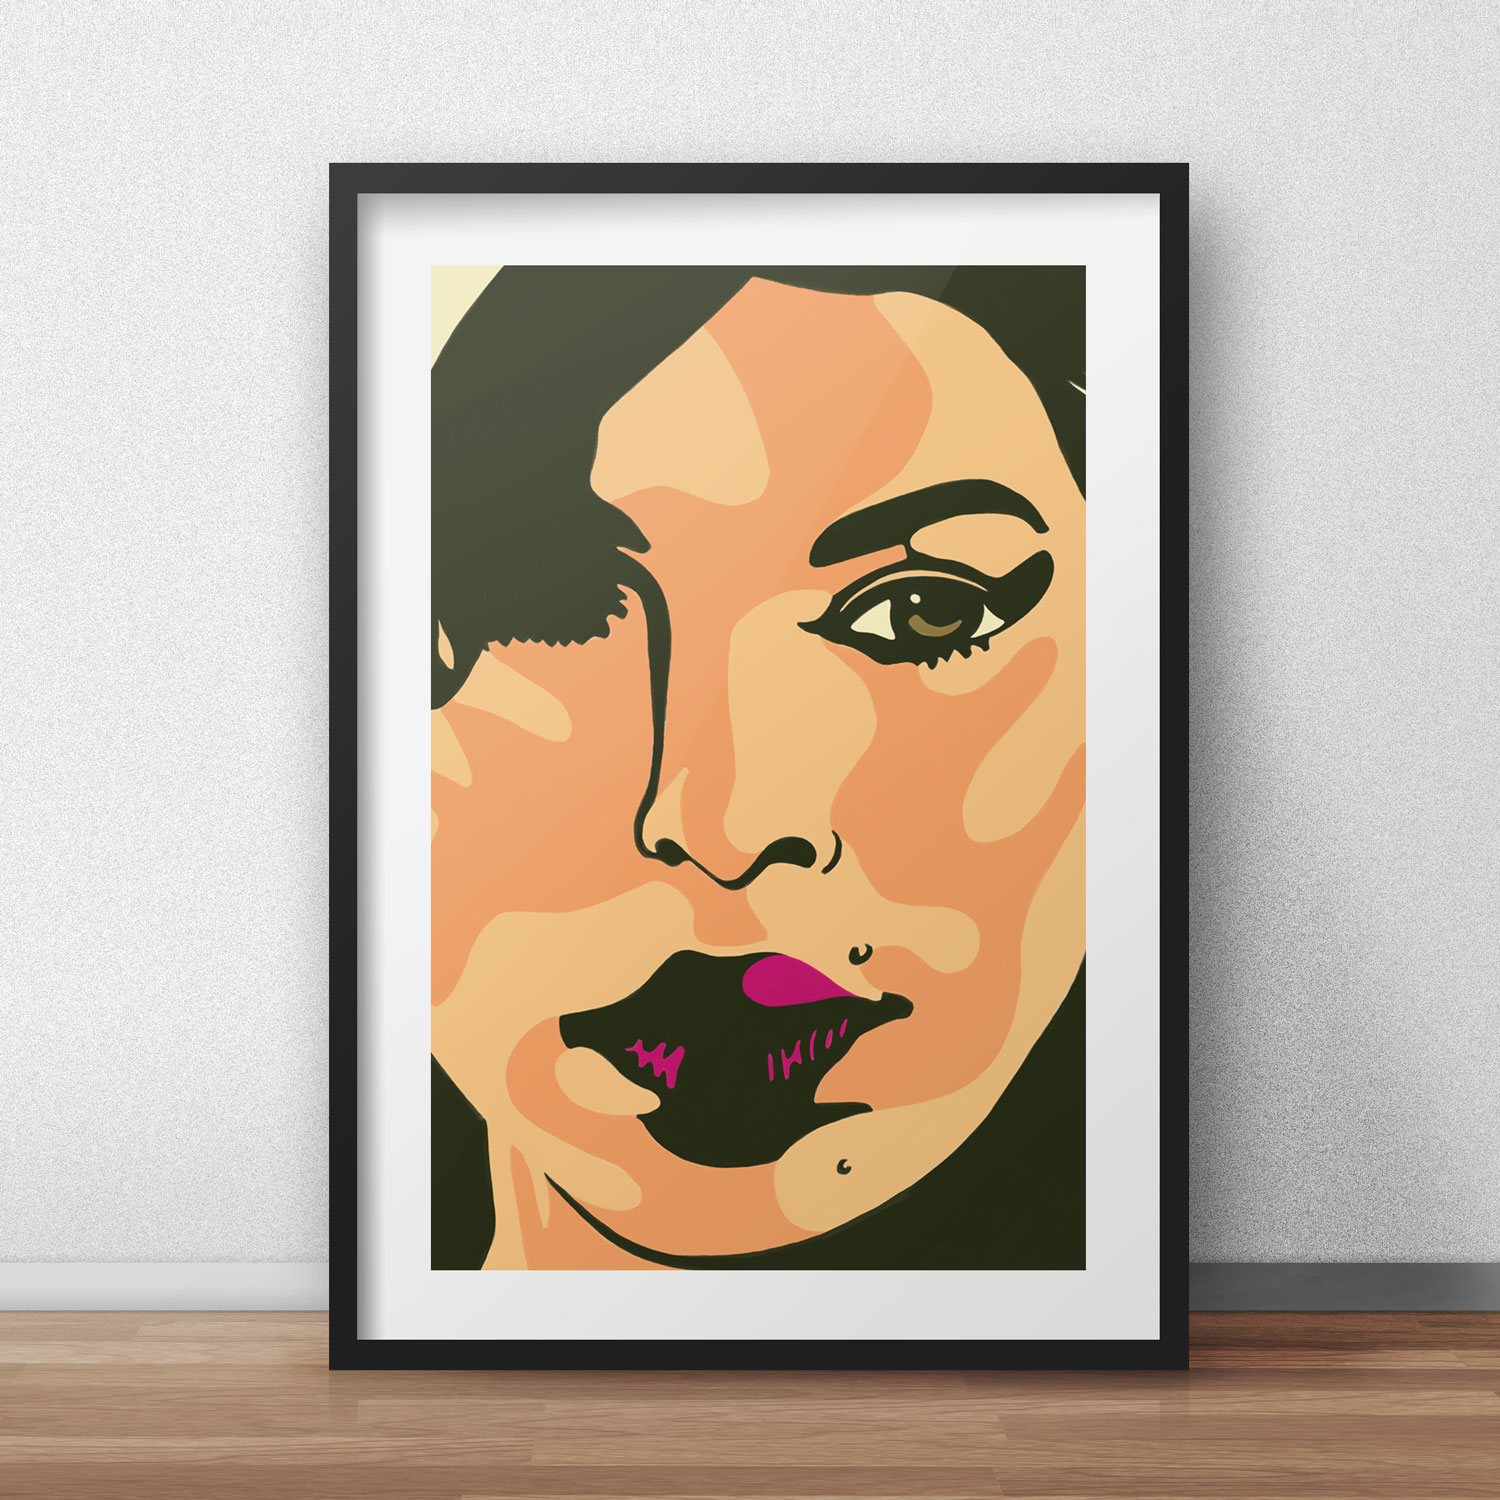 Portrait of the amazing Amy Winehouse.